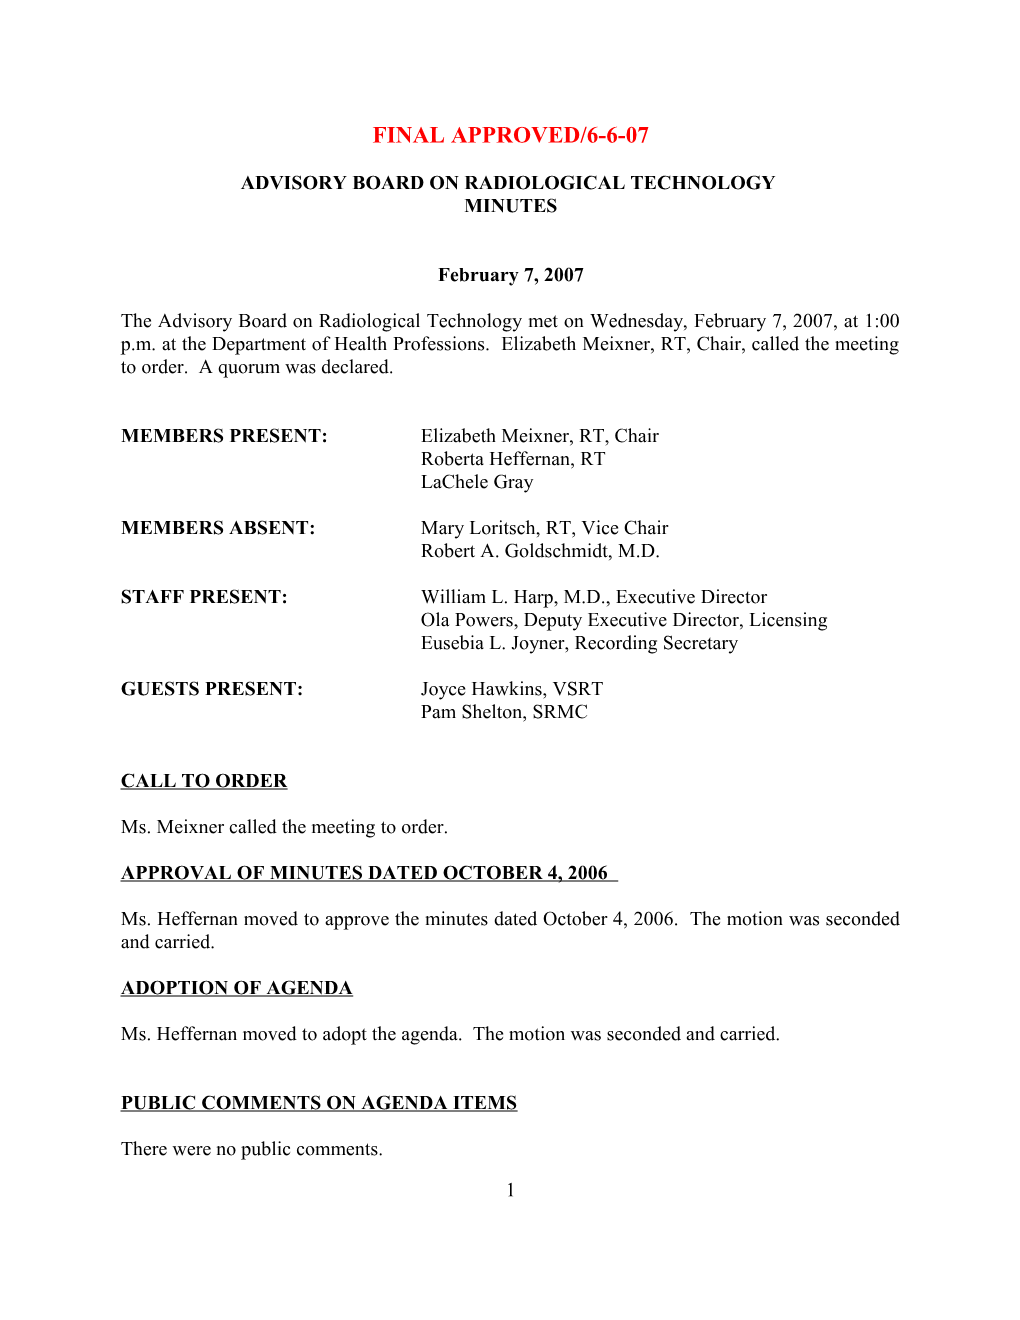 Medicine-Advisory Board of Radiological Technology, February 7, 2007 Minutes